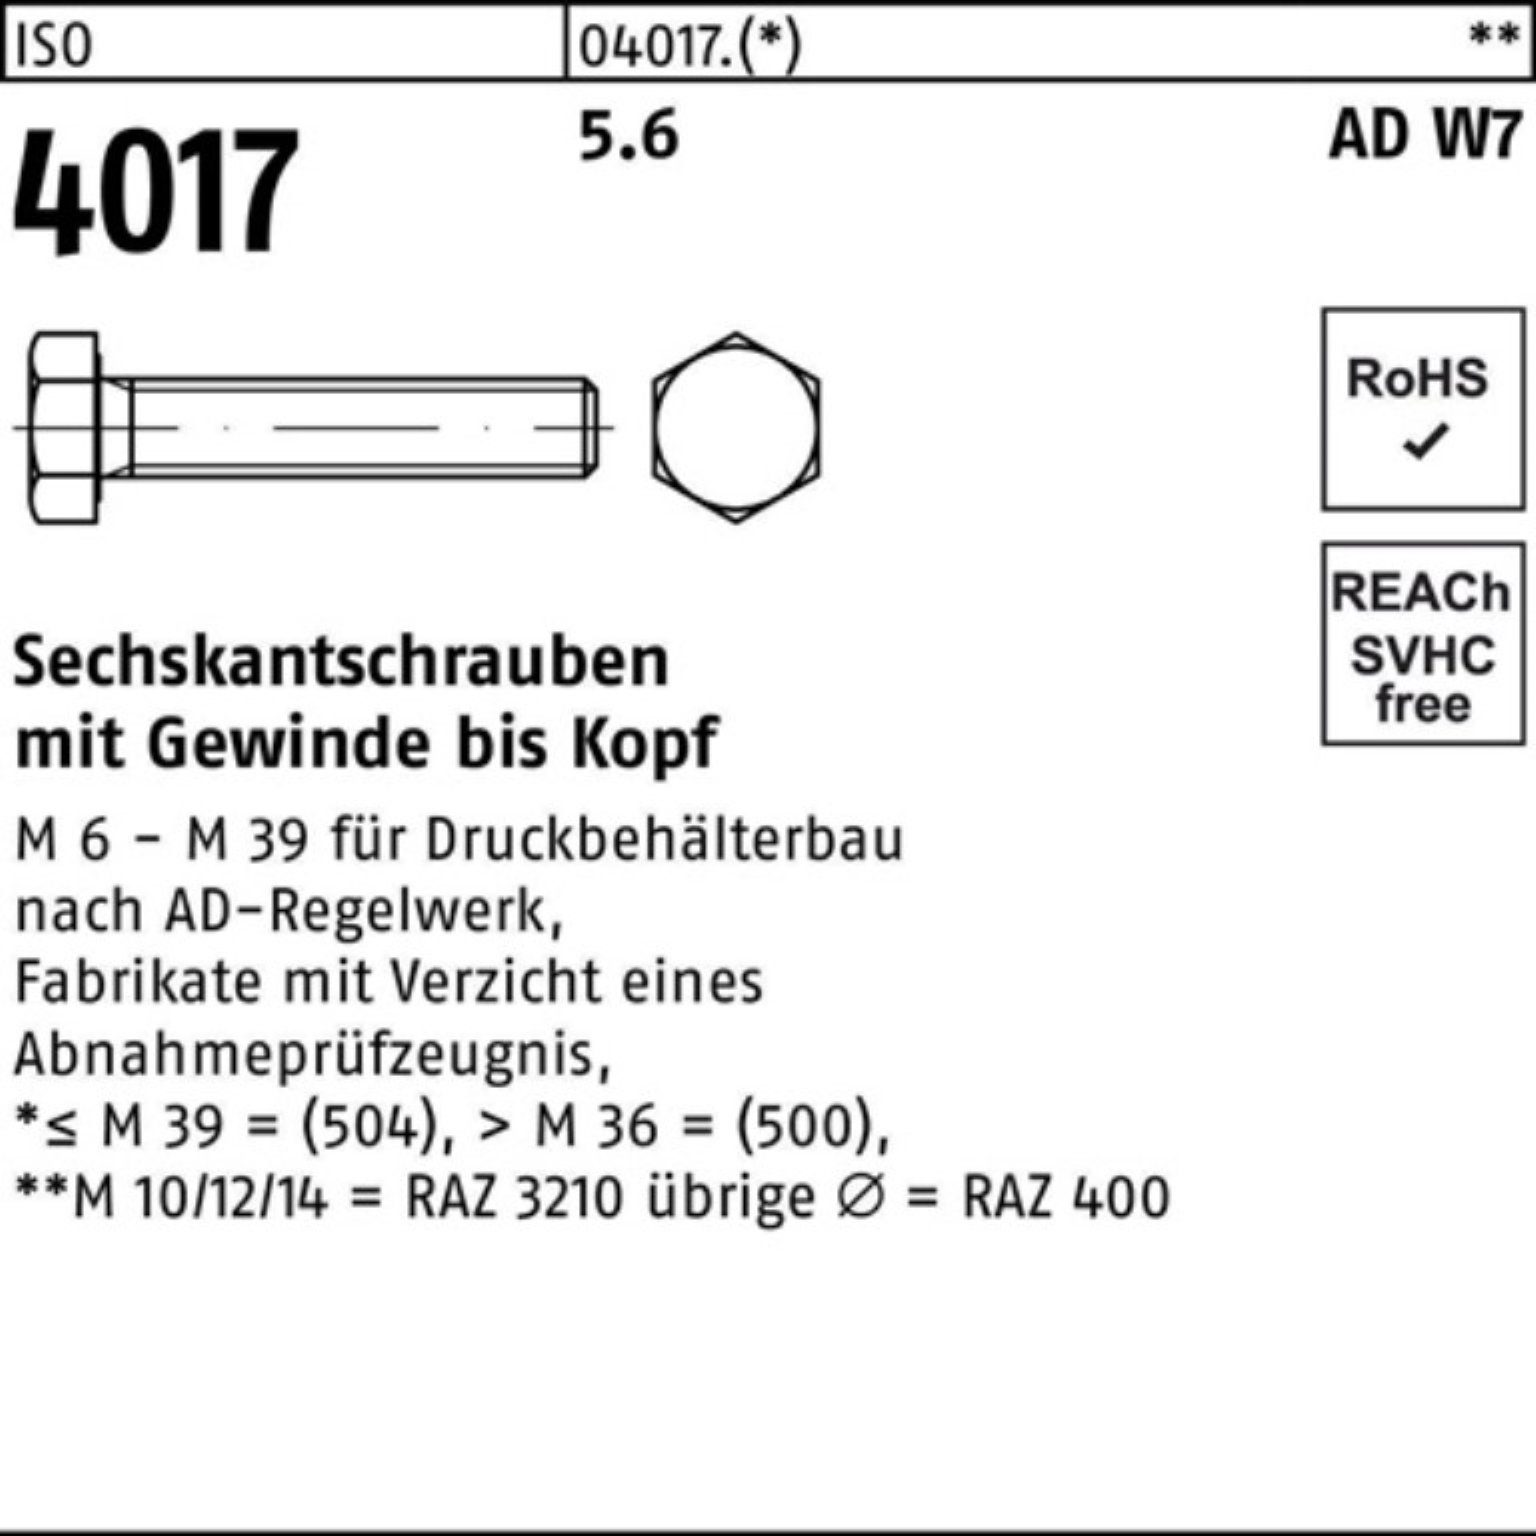 Bufab Sechskantschraube Sechskantschraube Pack AD 4017 W7 VG 5.6 ISO 1 200 100er Stück M20x I